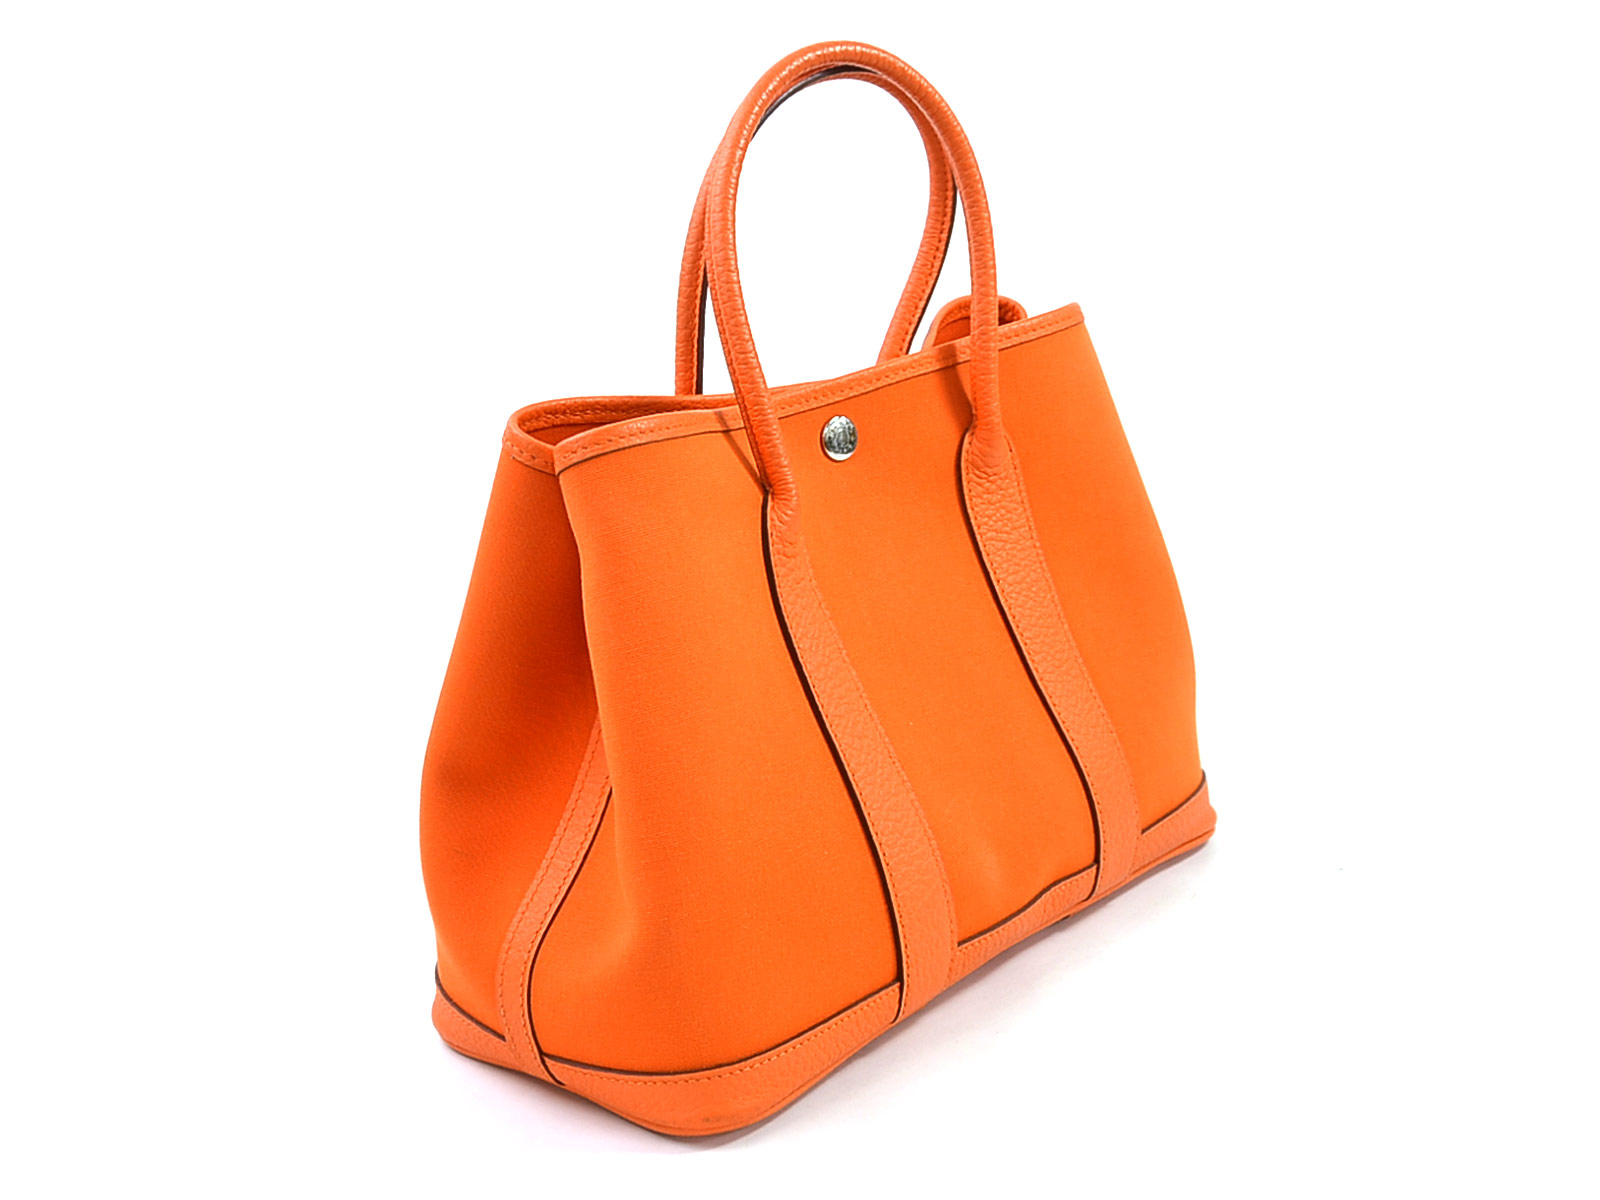 Auth HERMES Square R (2014) Garden Party Handbag Tote Bag Orange - 97965f | eBay